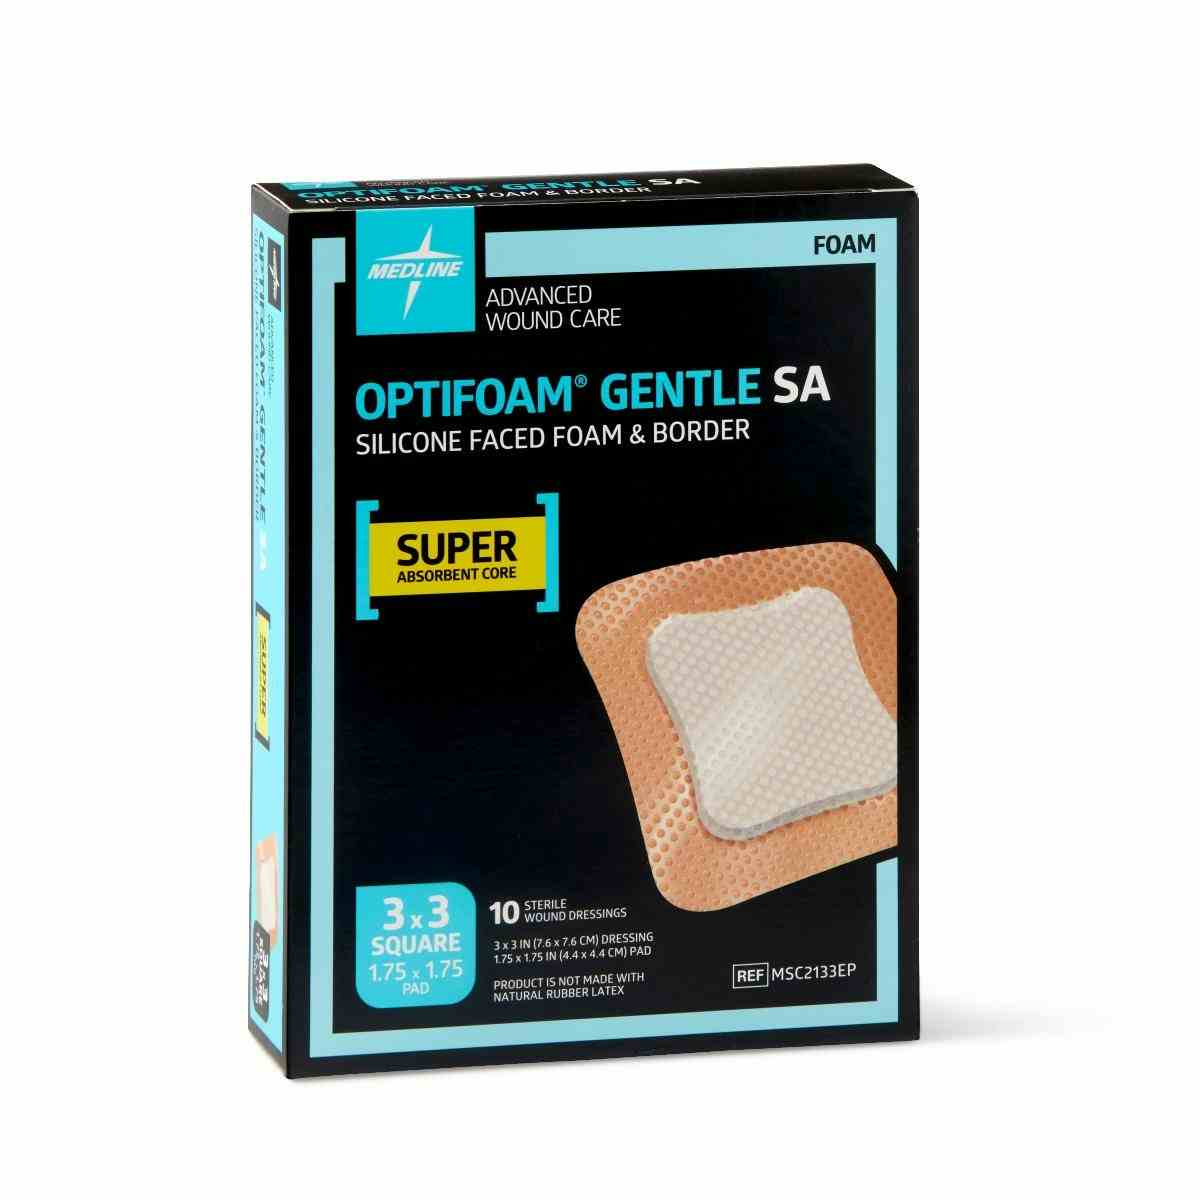 Optifoam Gentle SA Silicone-Faced Foam Dressing